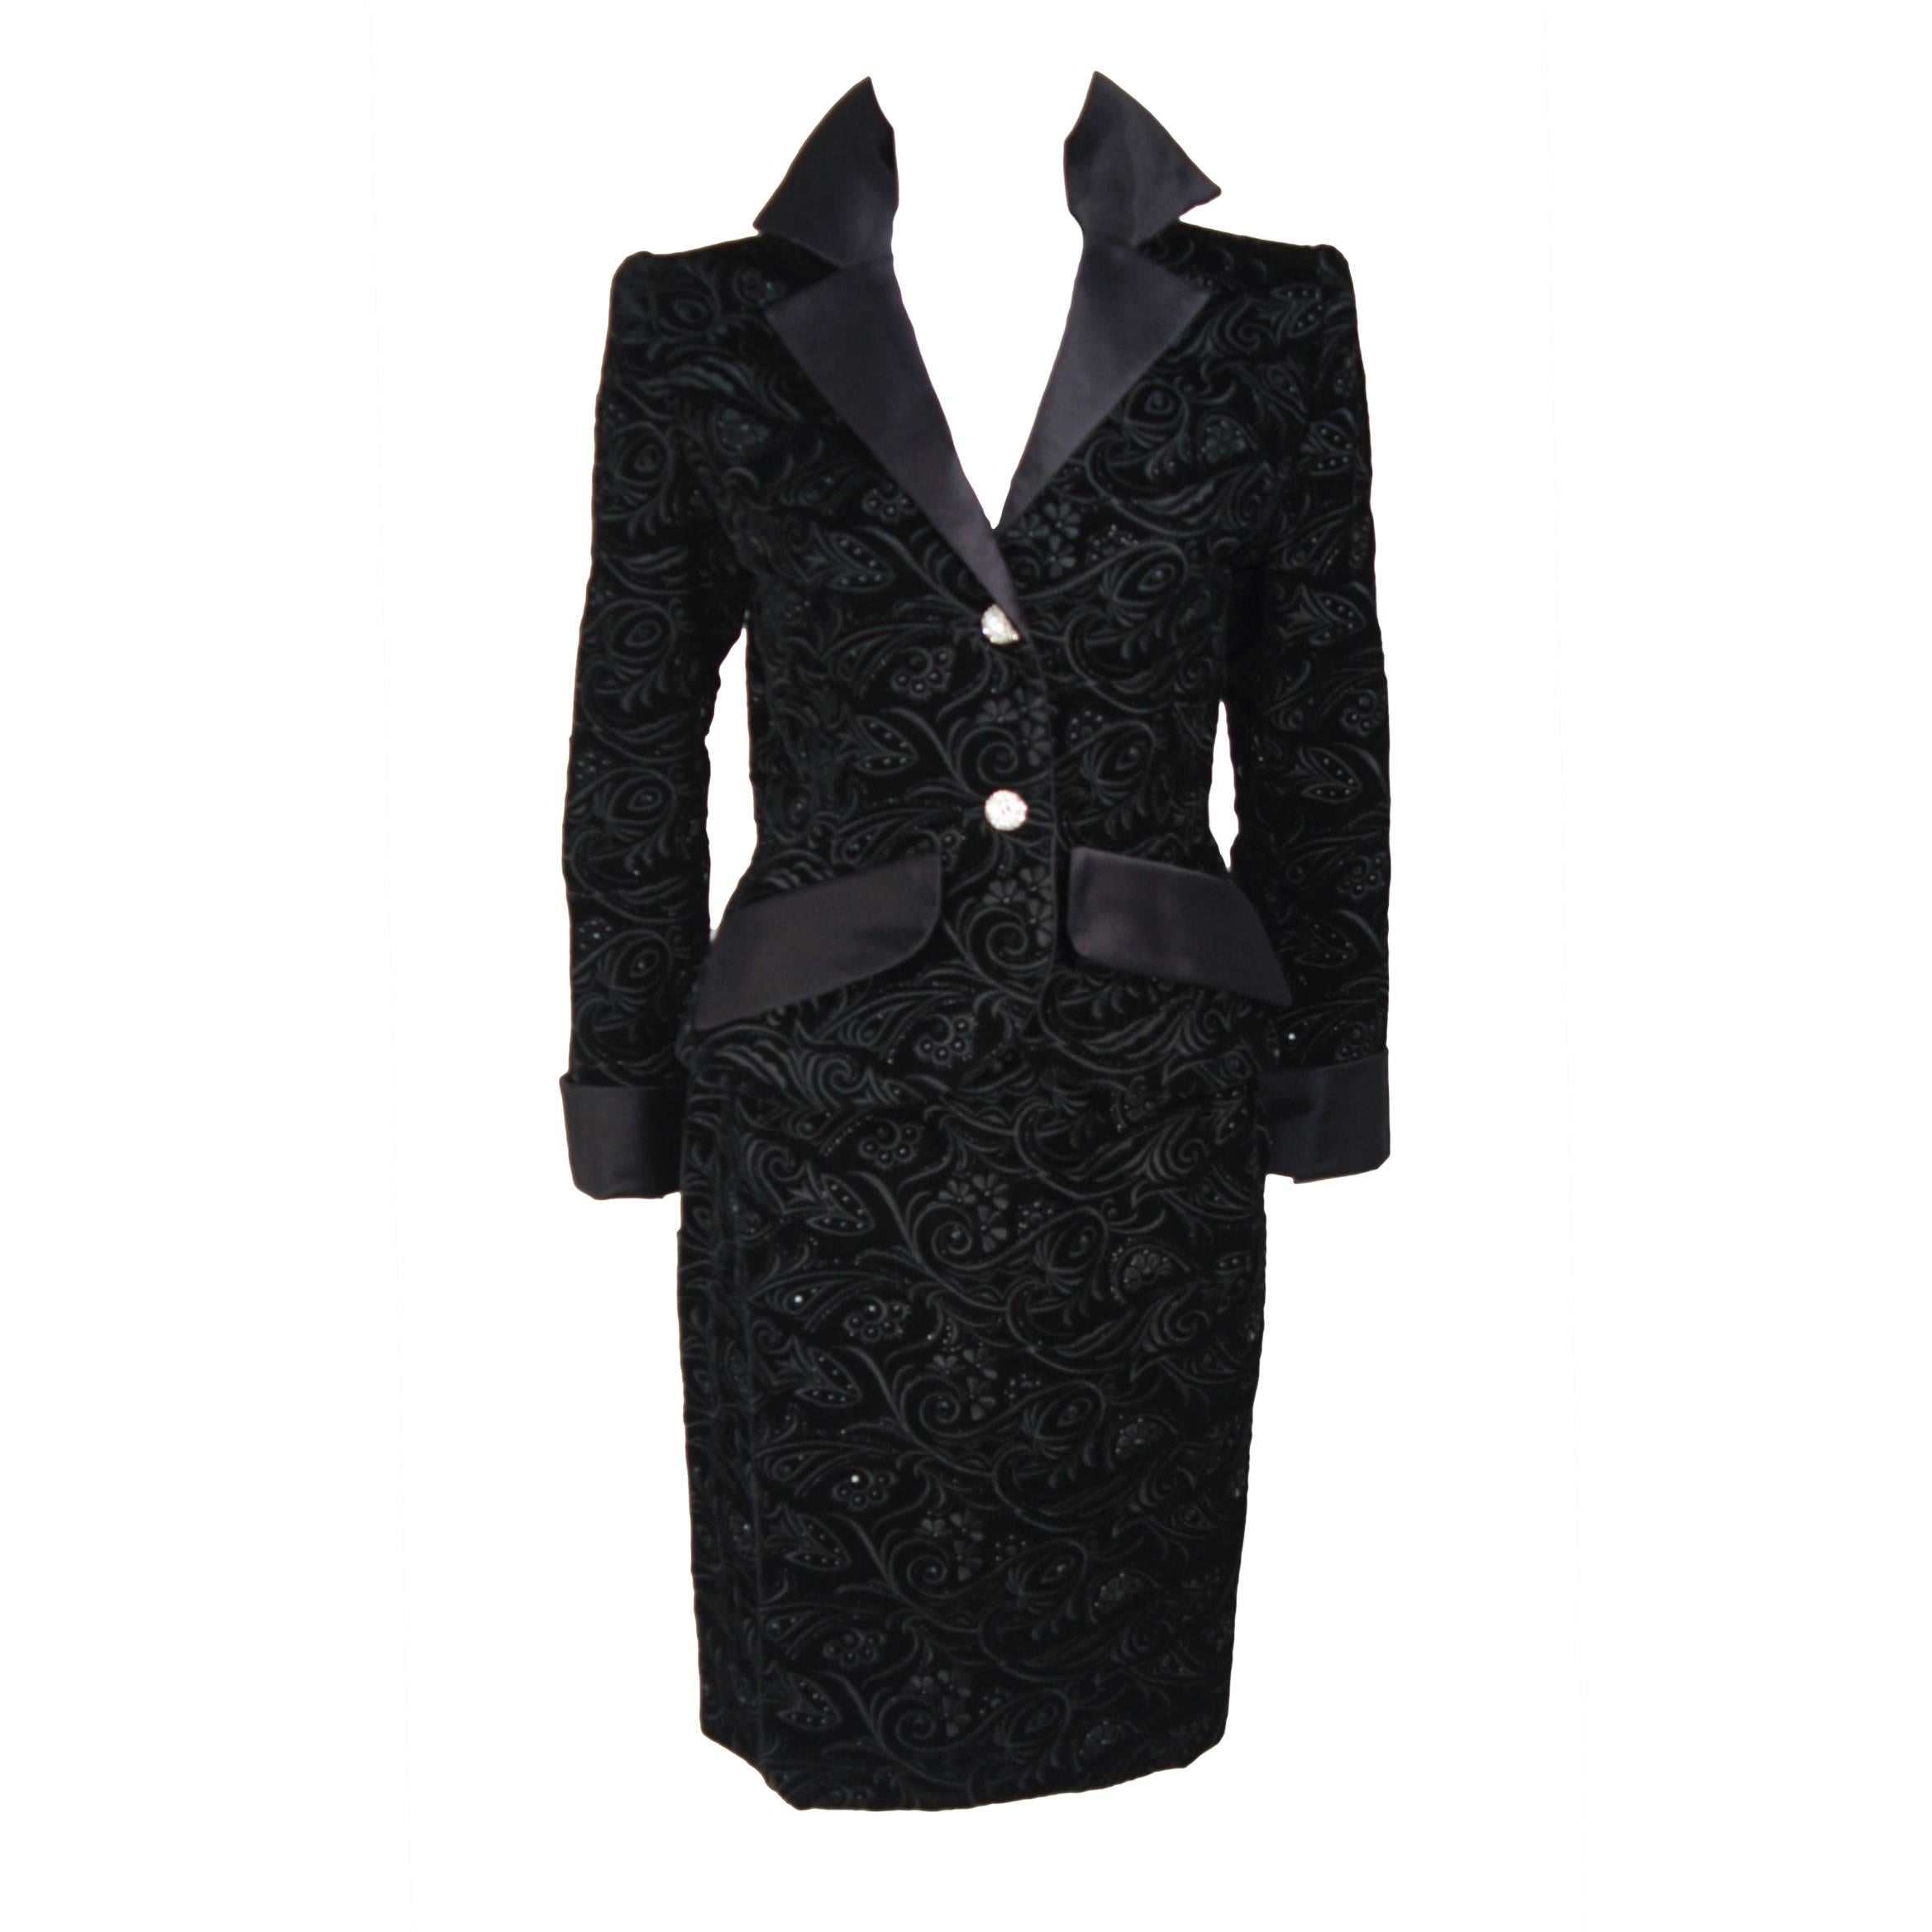 GIVENCHY COUTURE 1980s Black Velvet Floral Embroidered Embellished Suit Size 4-6